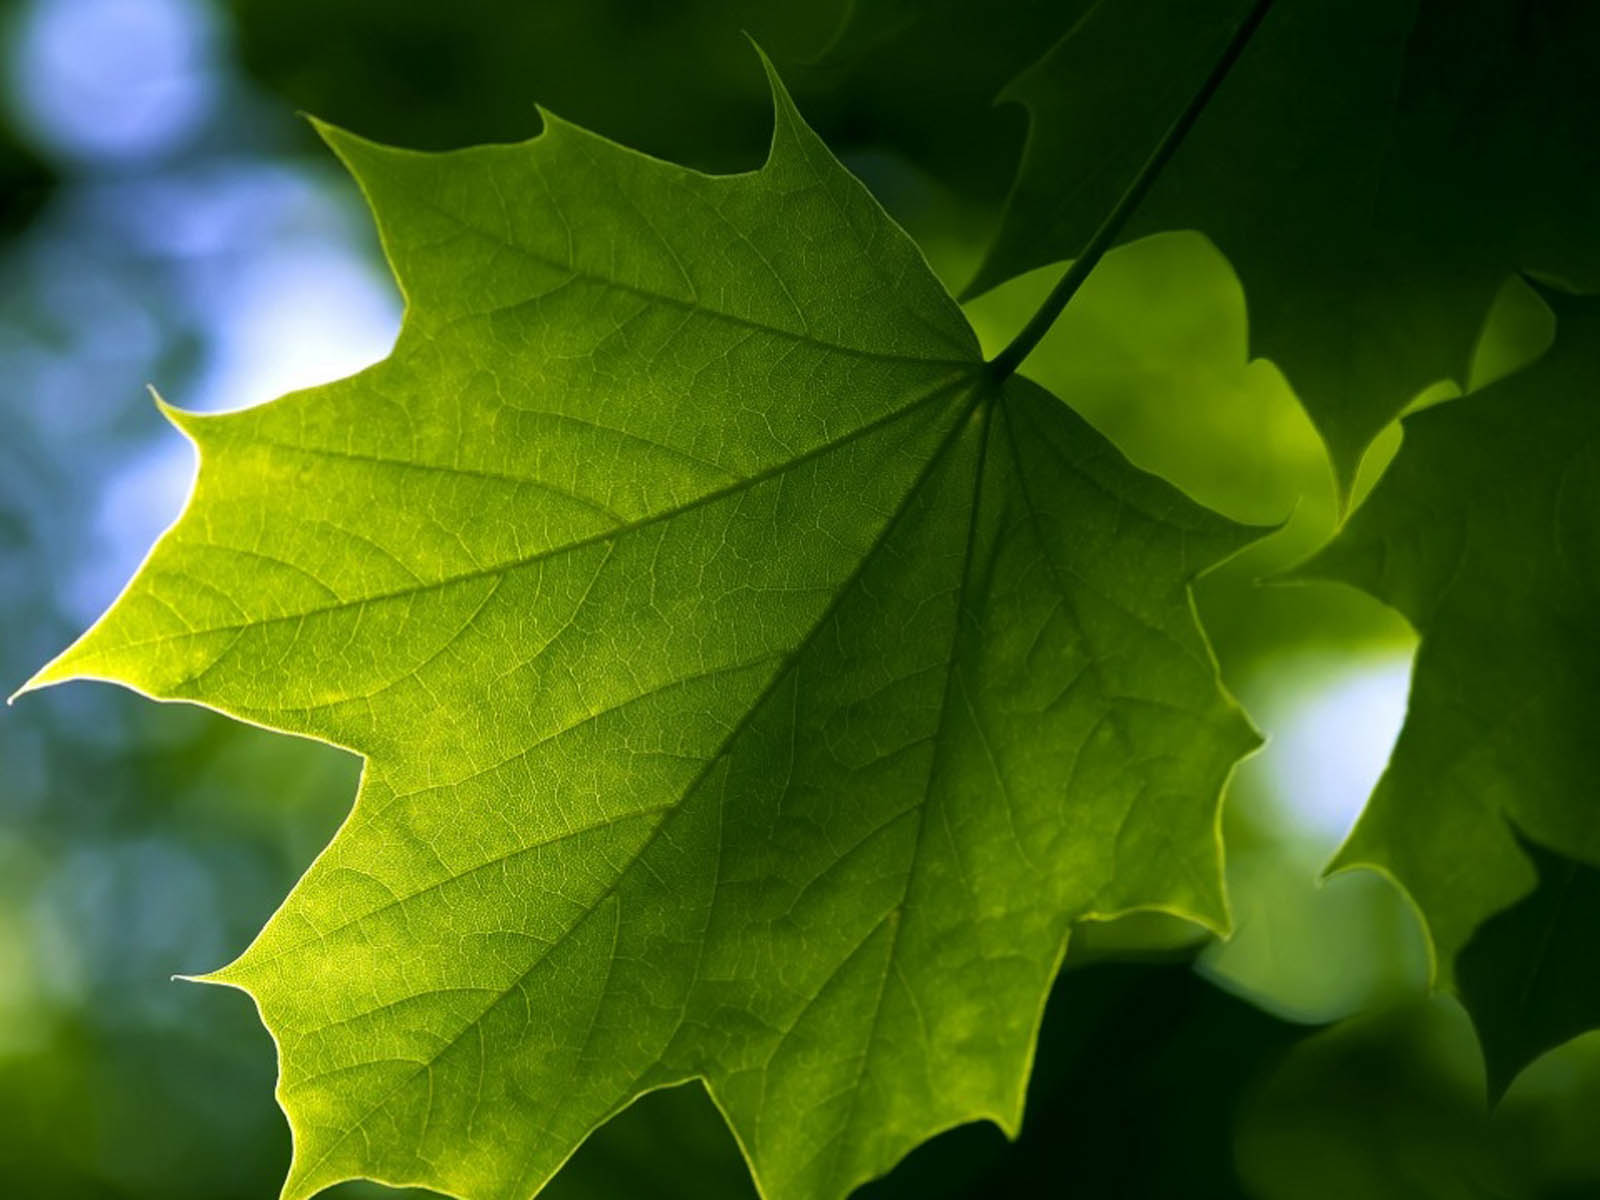 Wallpaper Green Leaf